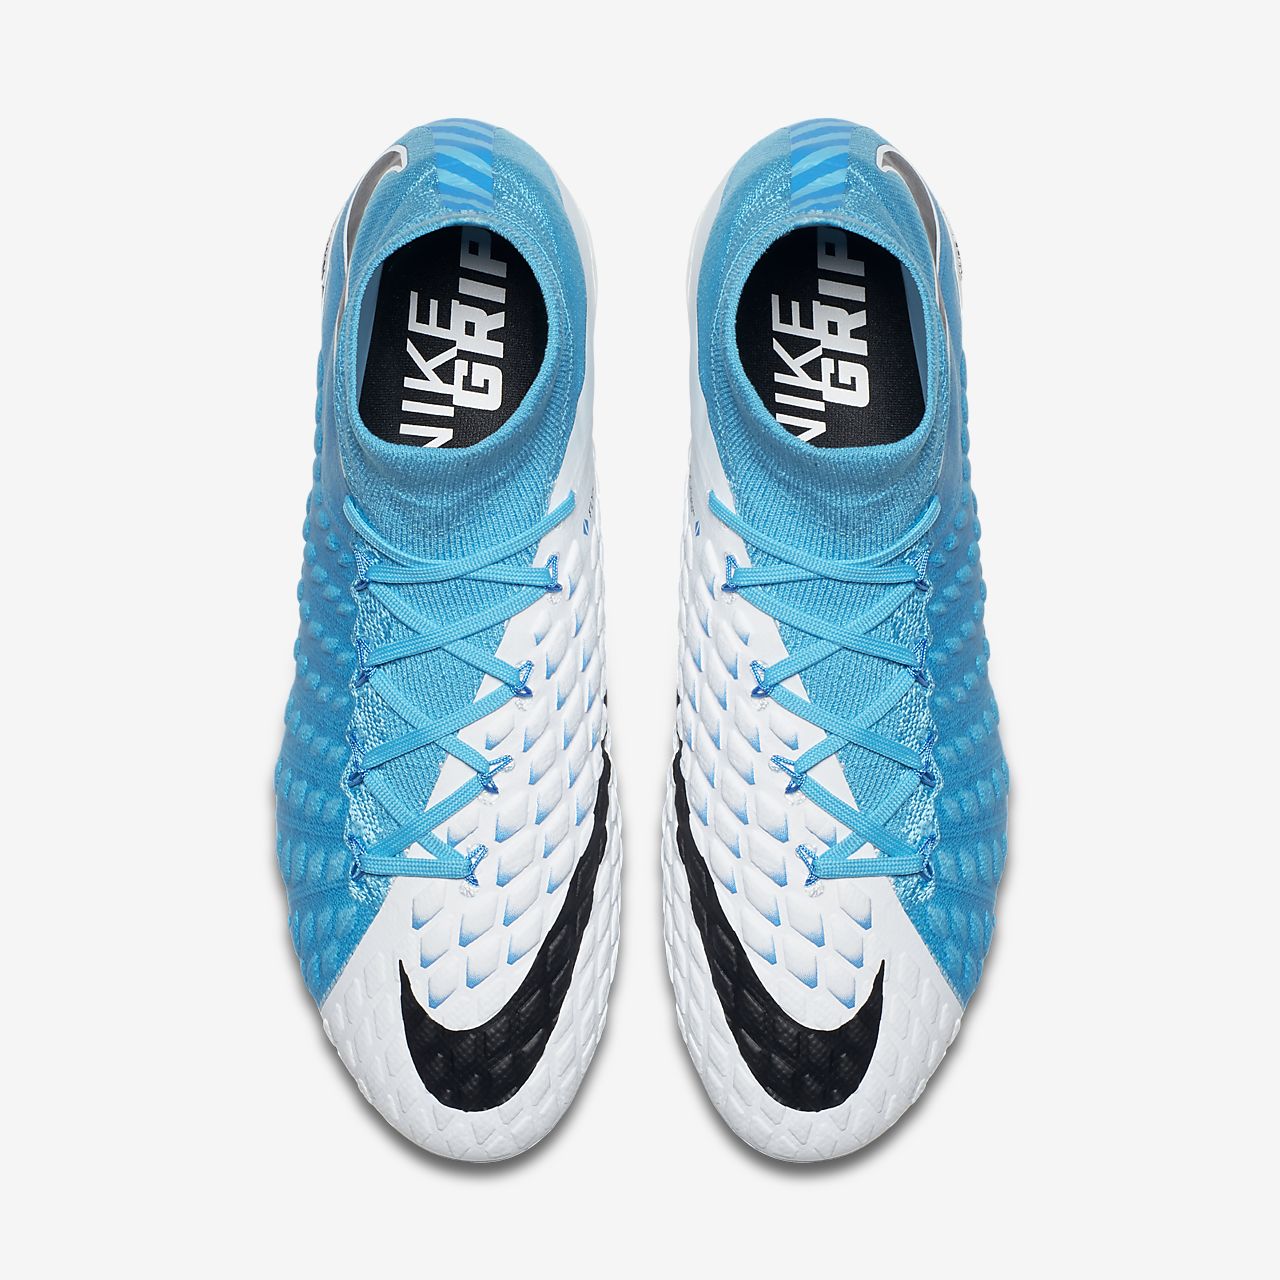 Nike HypervenomX Finale II IC Men's Soccer Shoes Laser